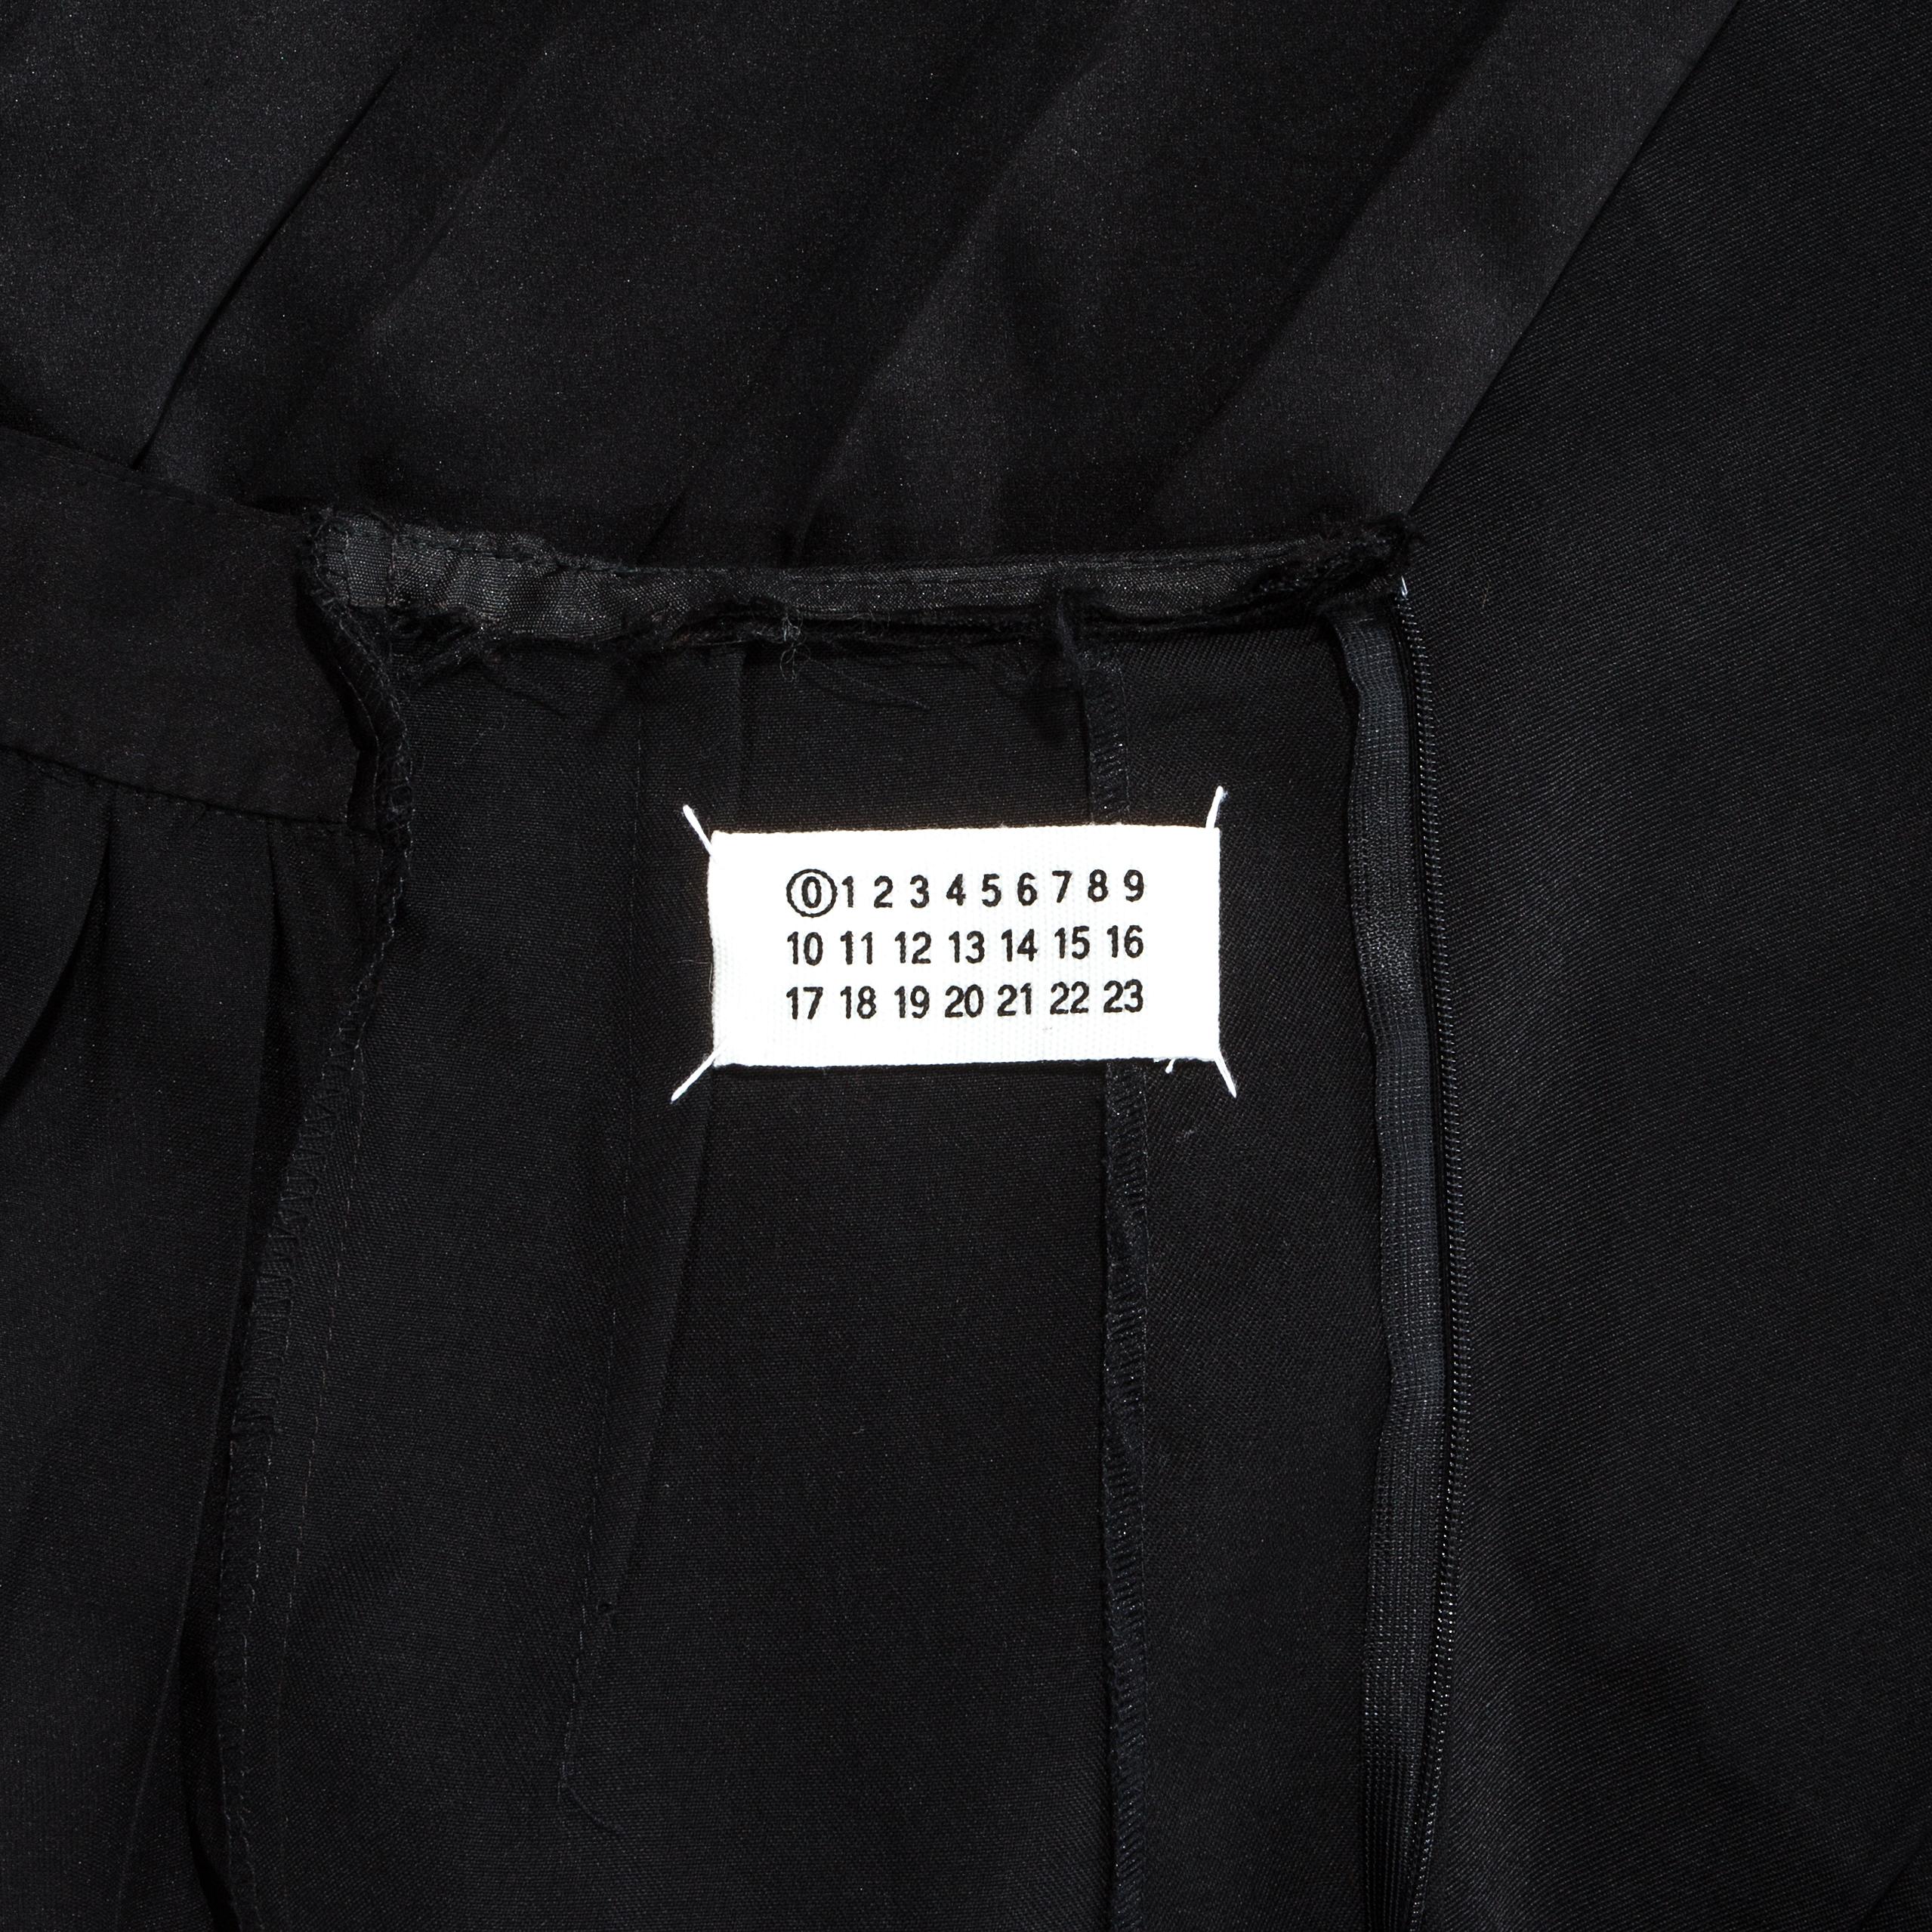 Margiela Artisanal black glove top and pleated skirt runway ensemble, ss 2001 For Sale 5